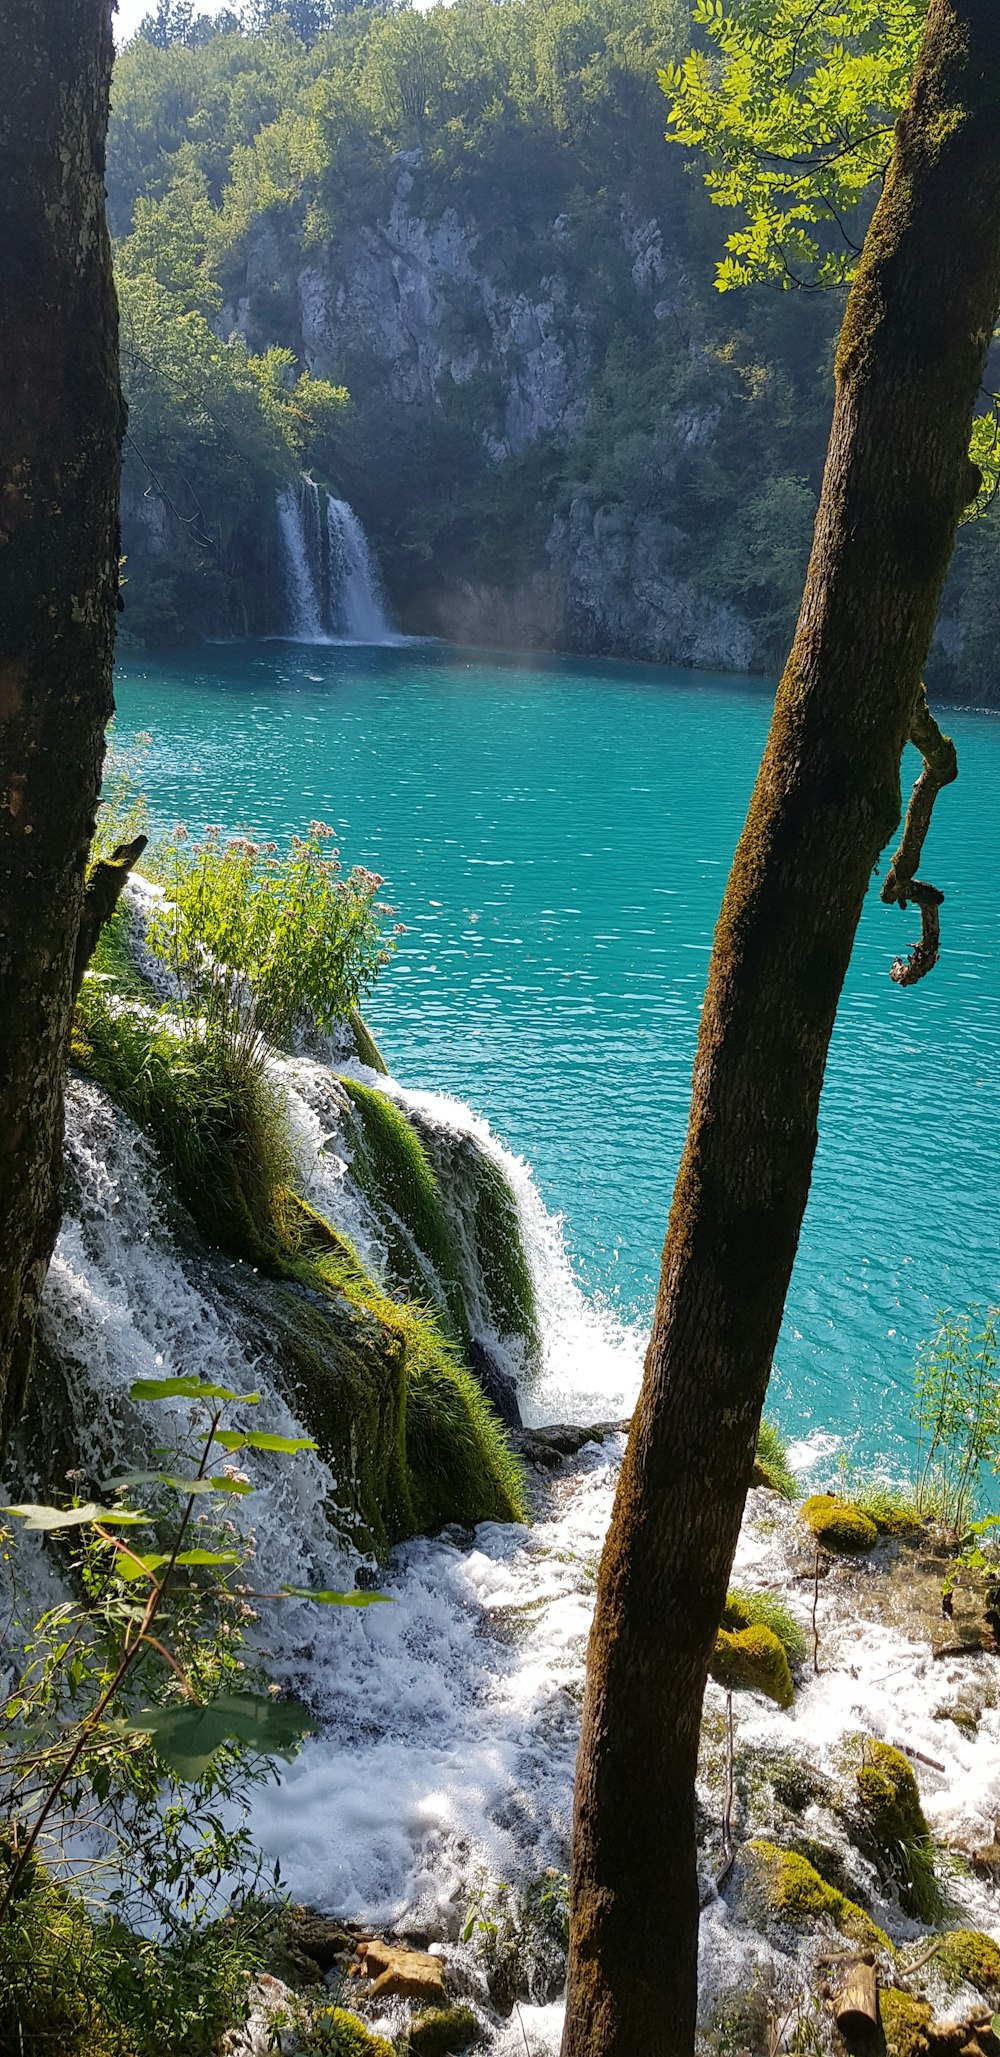 waterfalls near mountain and trees